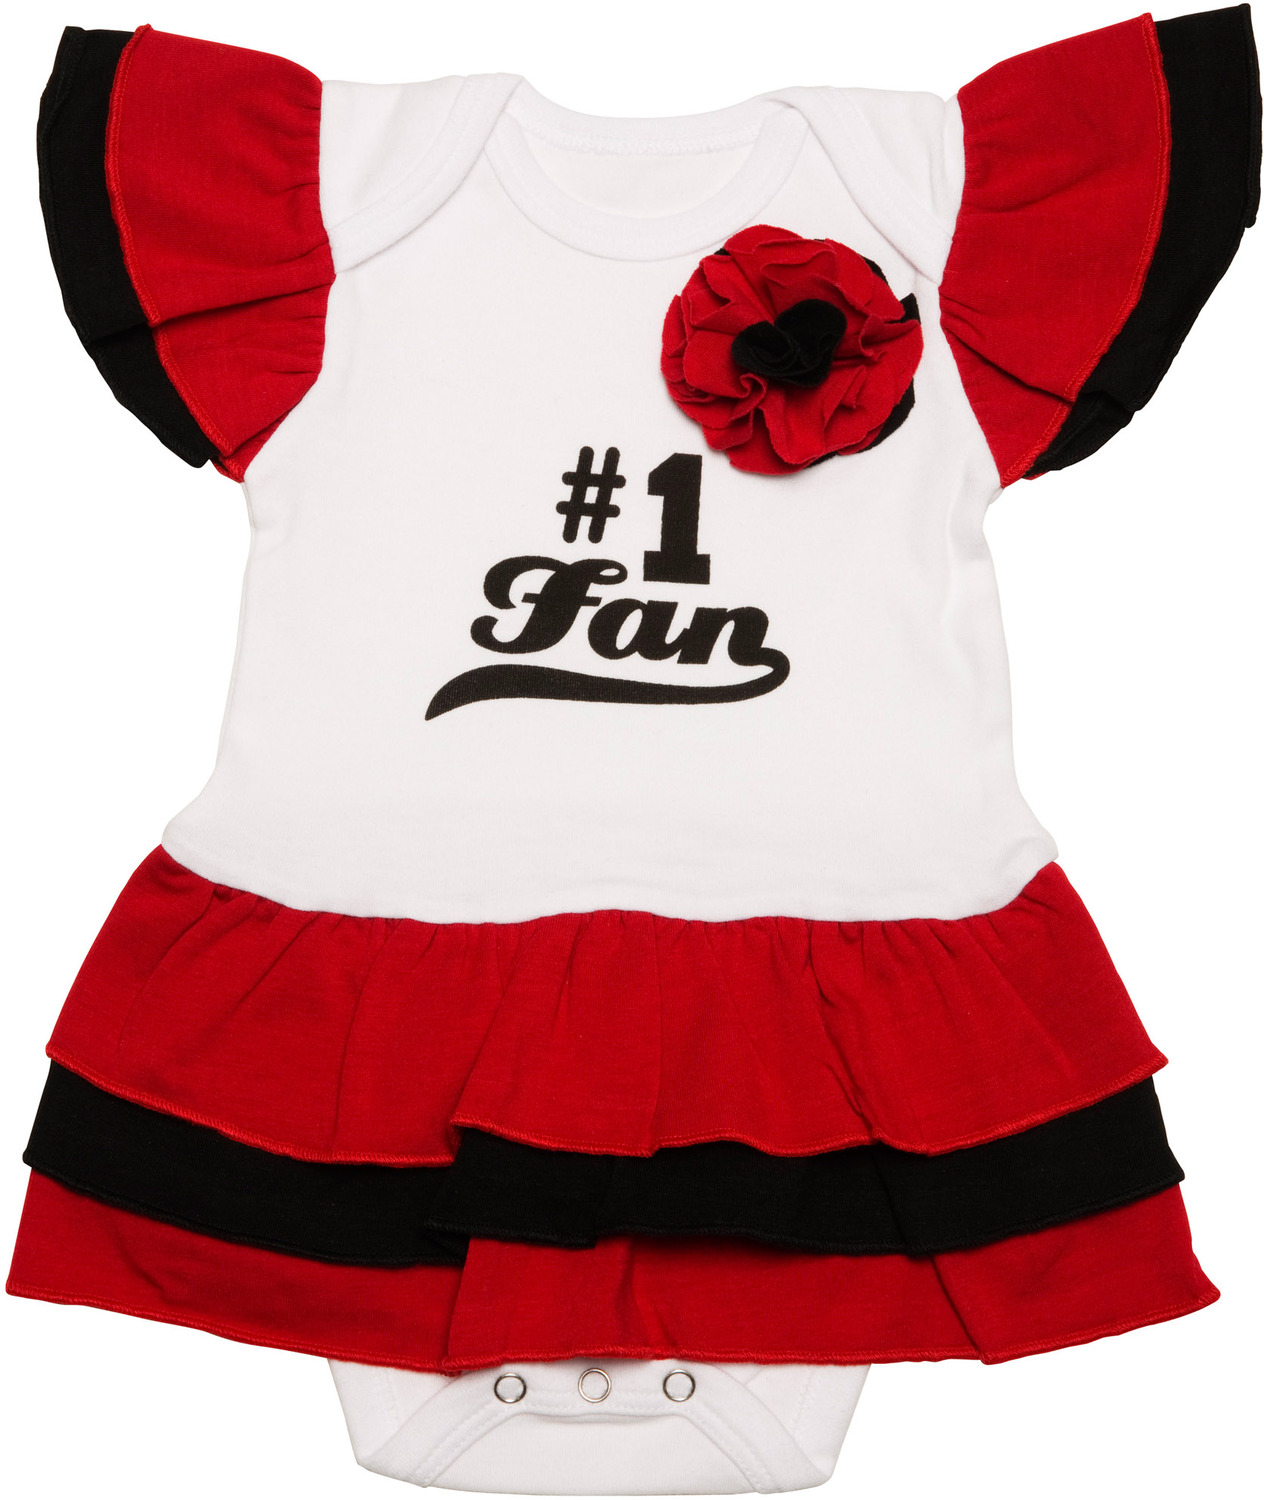 Red & Black by Itty Bitty & Pretty - Red & Black - #1 Fan Onesie Dress (0-6 Months)
